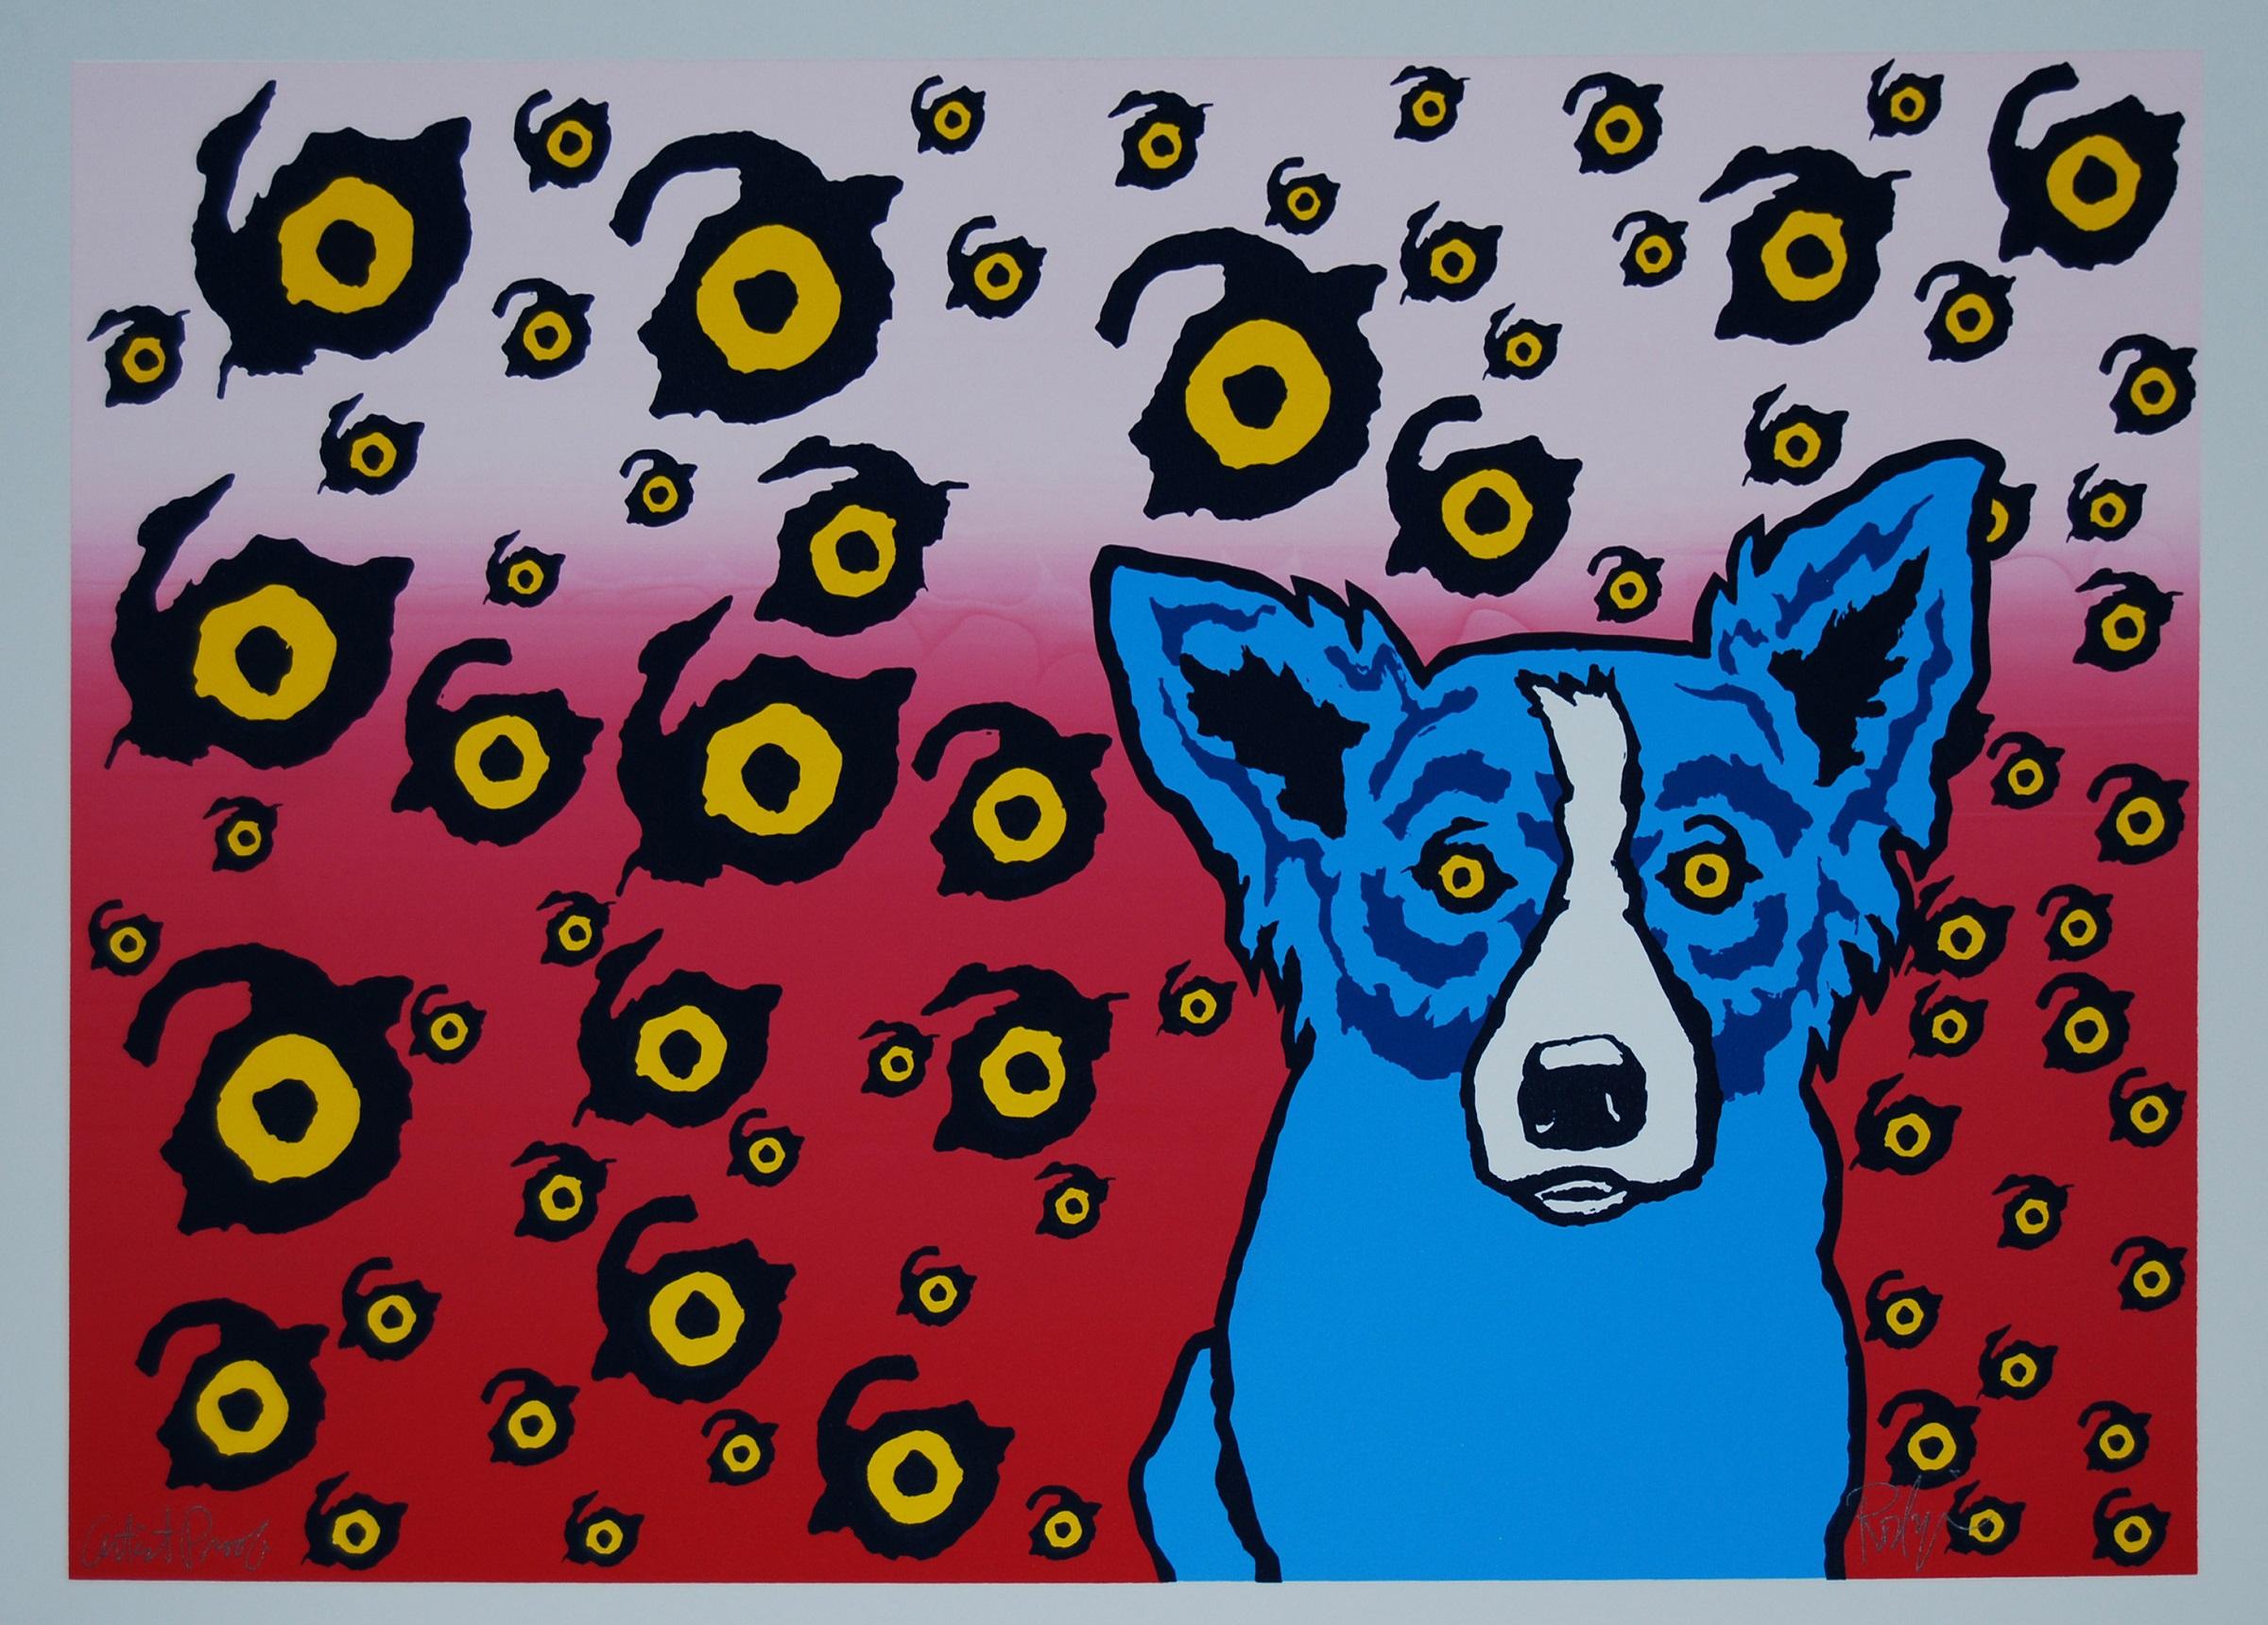 George Rodrigue Animal Print - I See You, You See Me Split Font - Signed Silkscreen Blue Dog Print